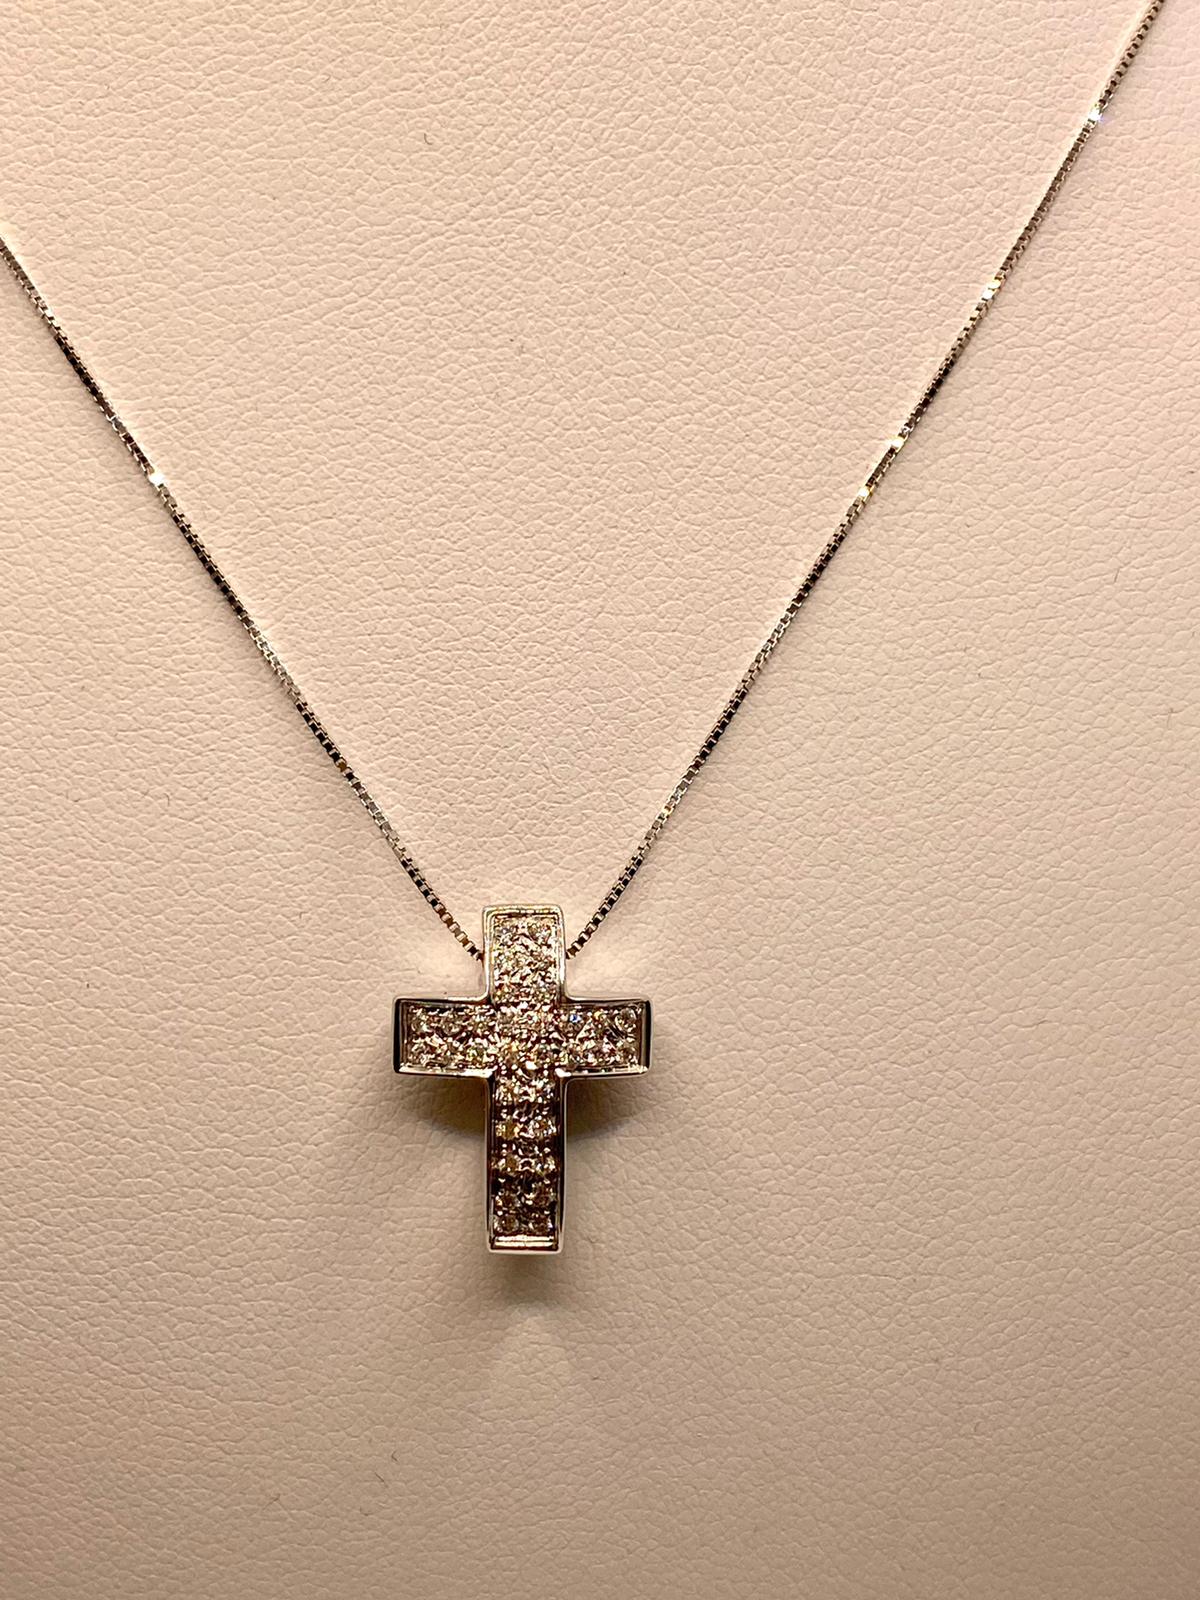 Cross pendant in white gold and diamonds.